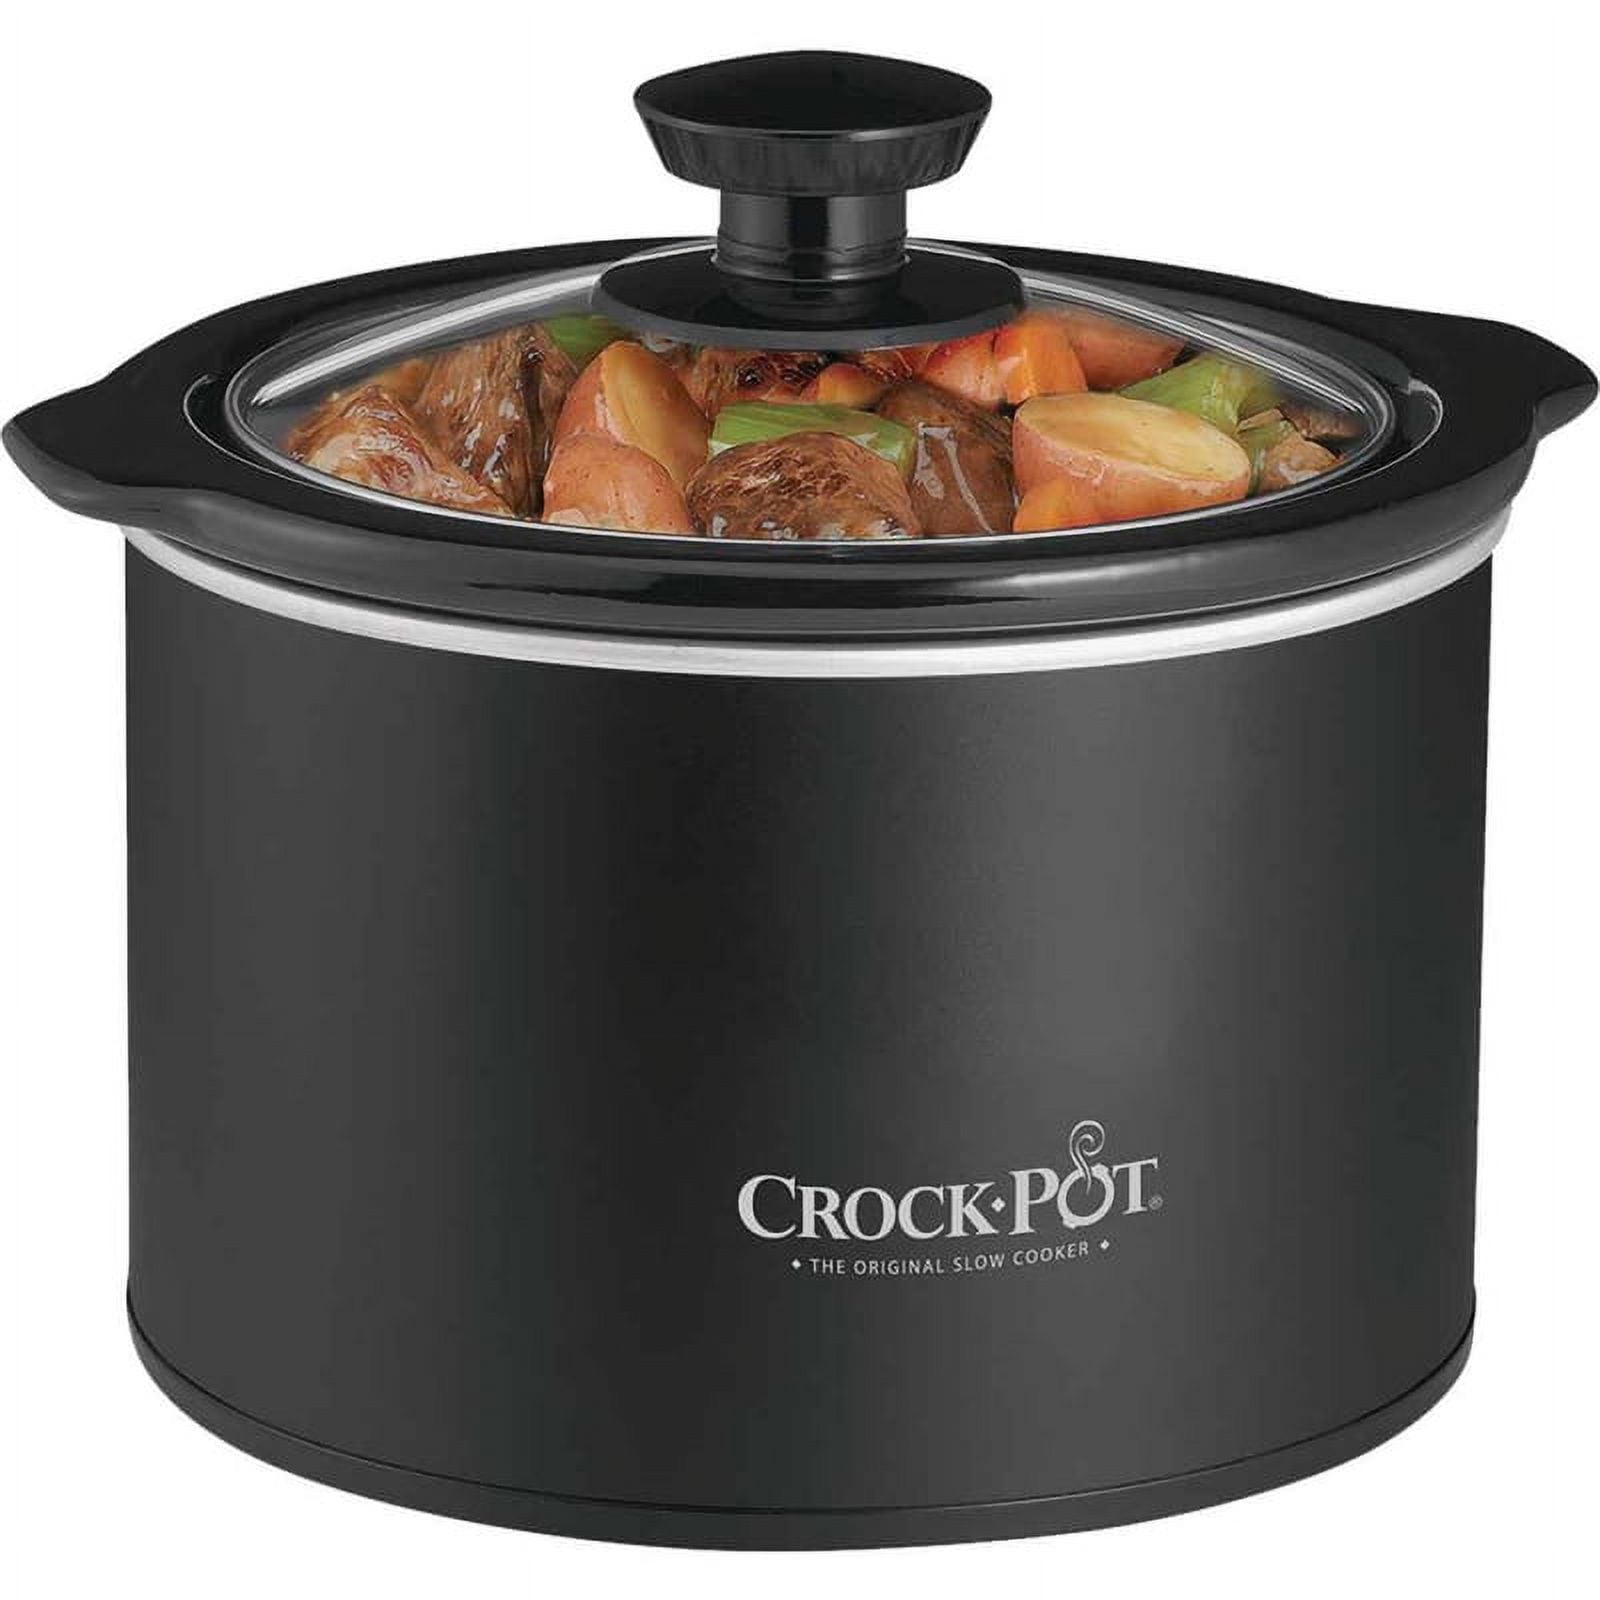 Crock Pot 1.5 Quart Manual Slow Cooker Black New in Box SCR151 